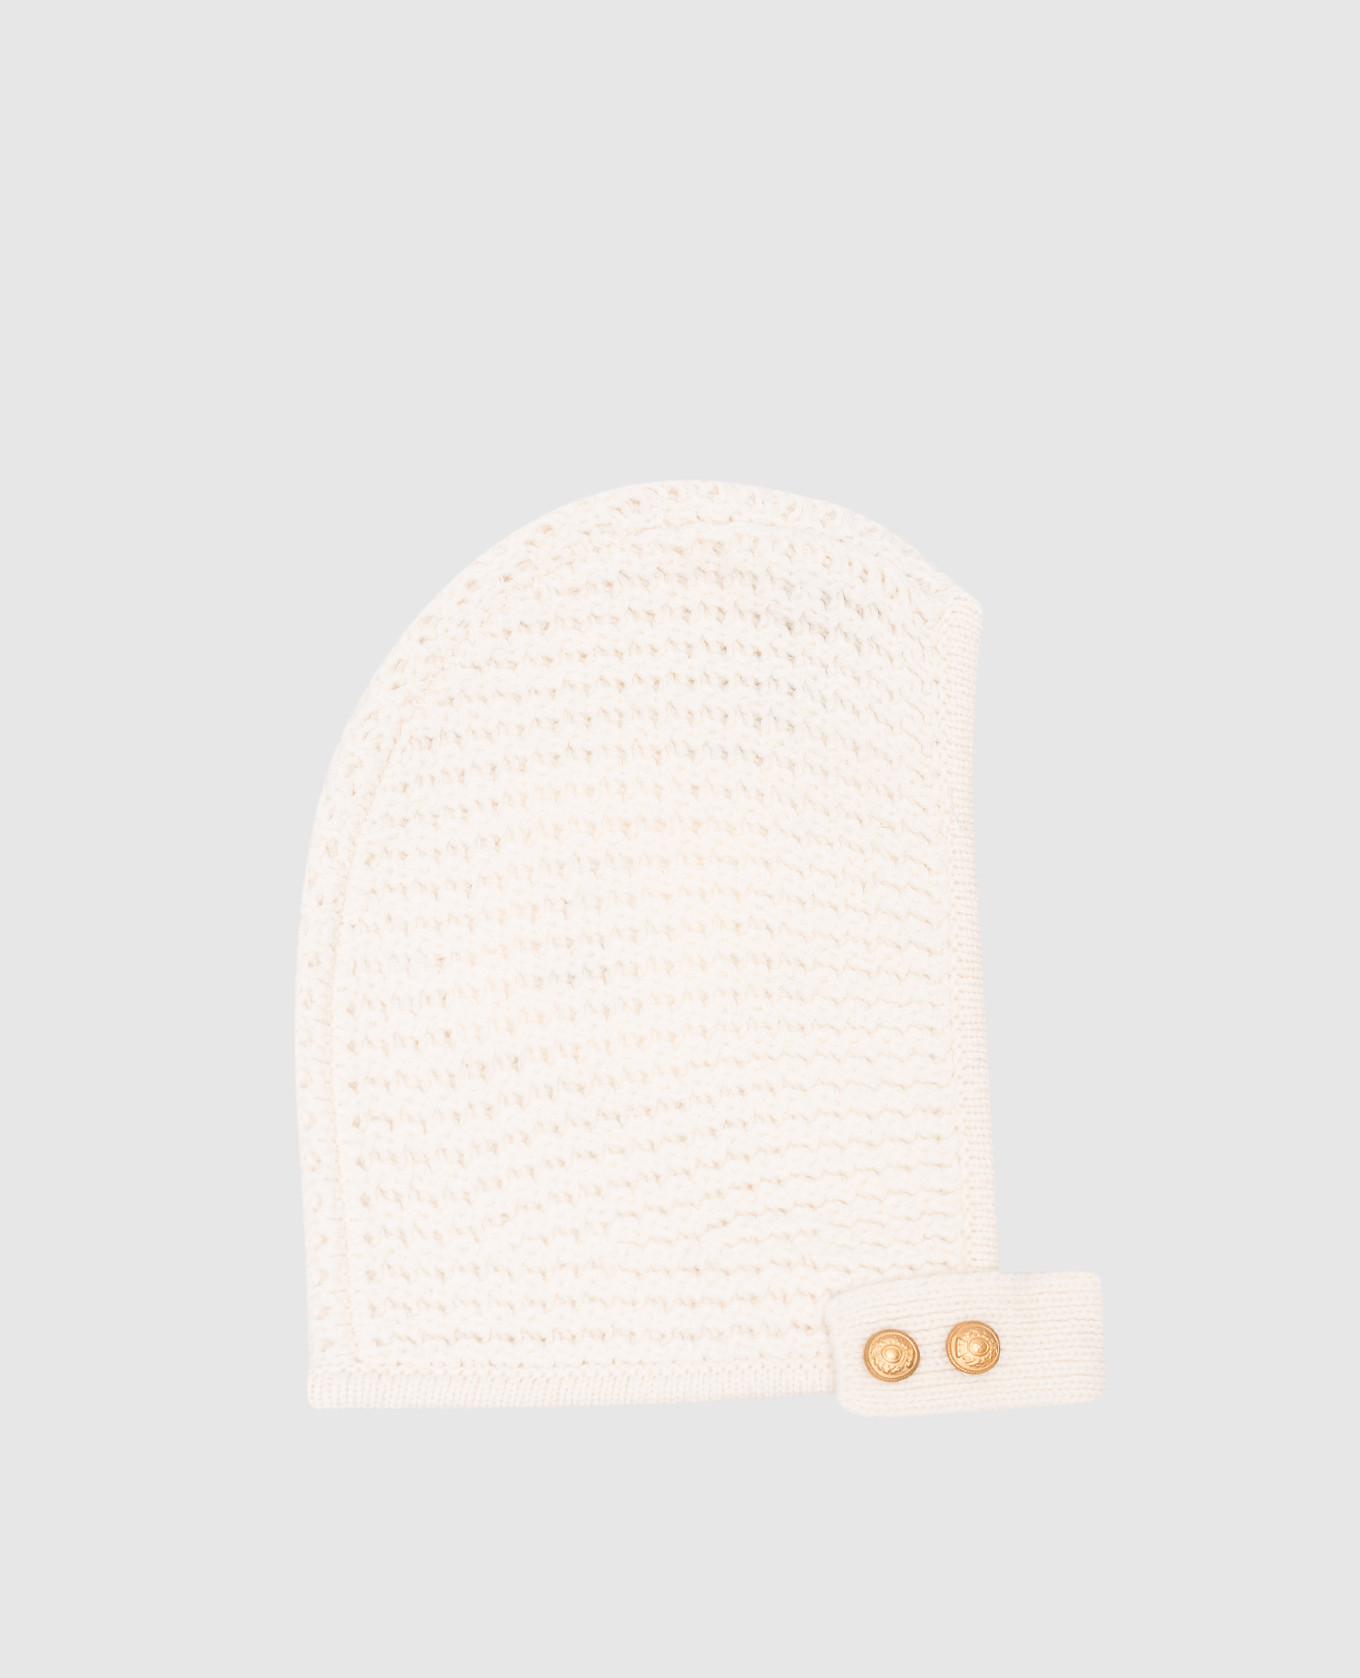 White cap made of wool